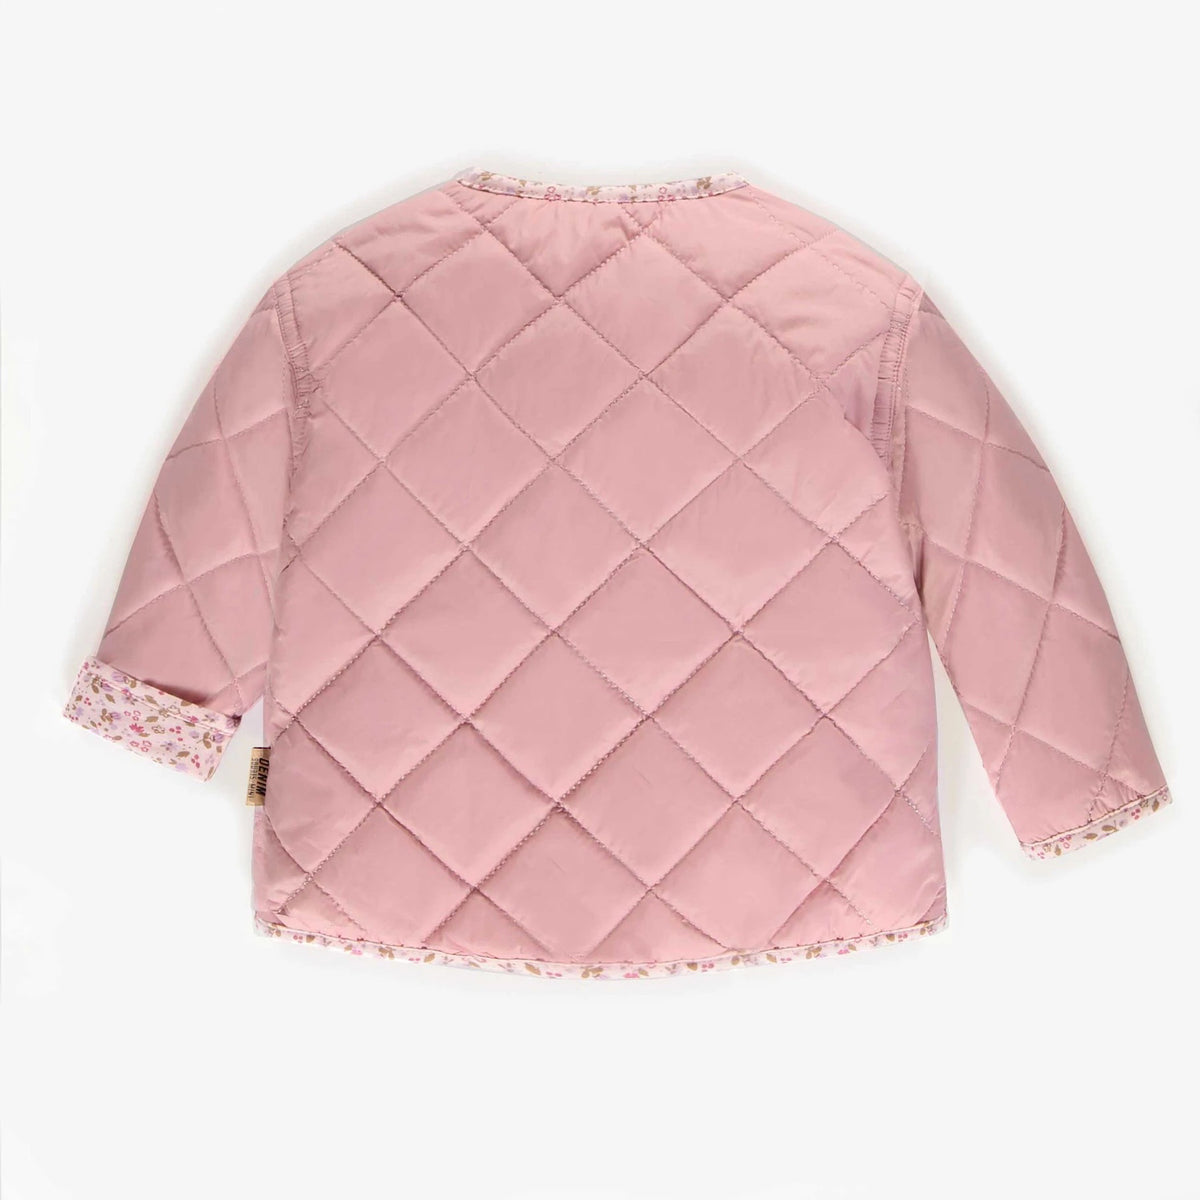 Reversible Pink Floral Print Jacket